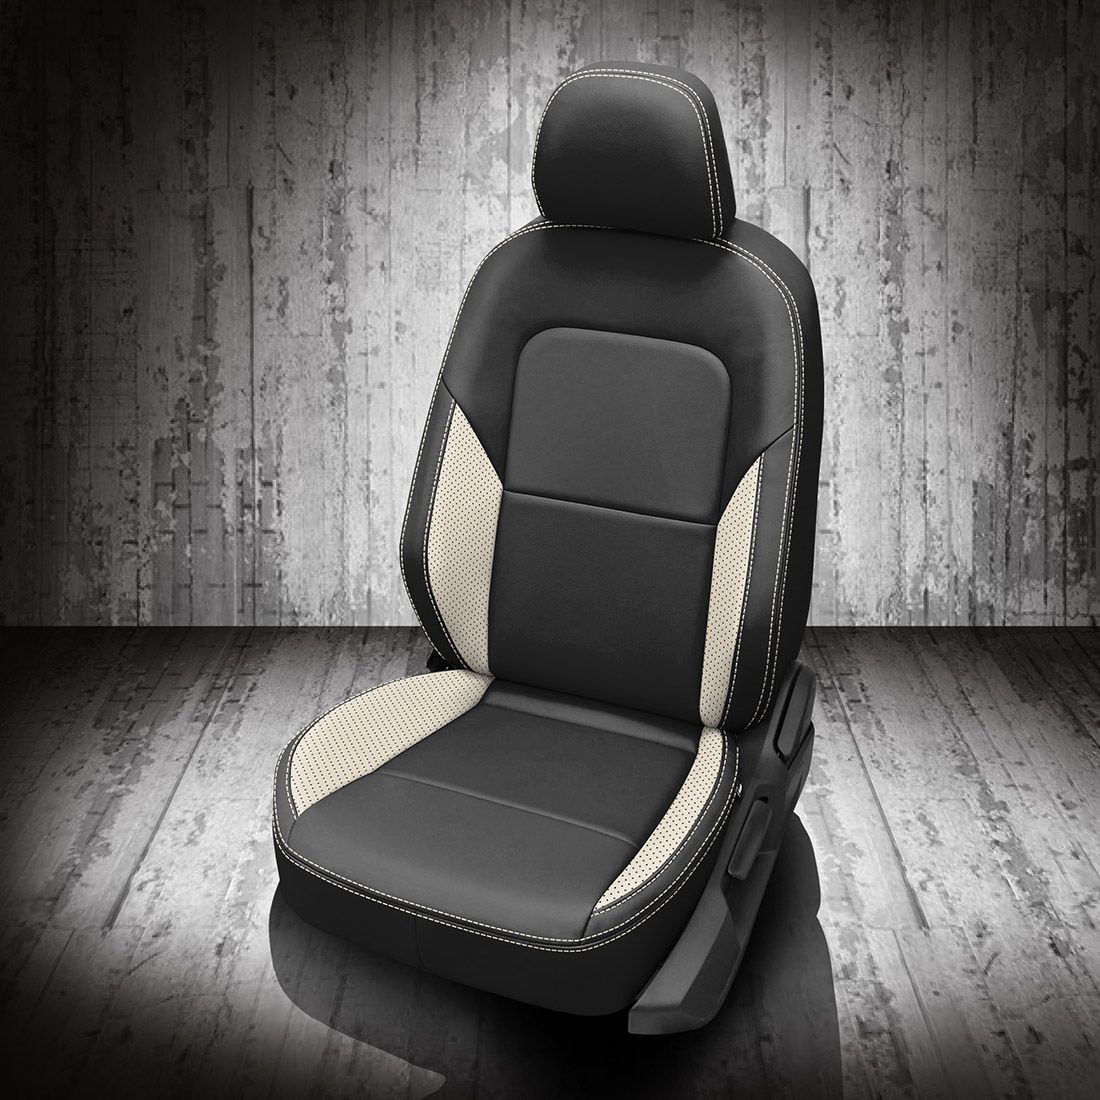 VW Jetta Seat Covers | Leather Seats | Interiors | Custom | Katzkin